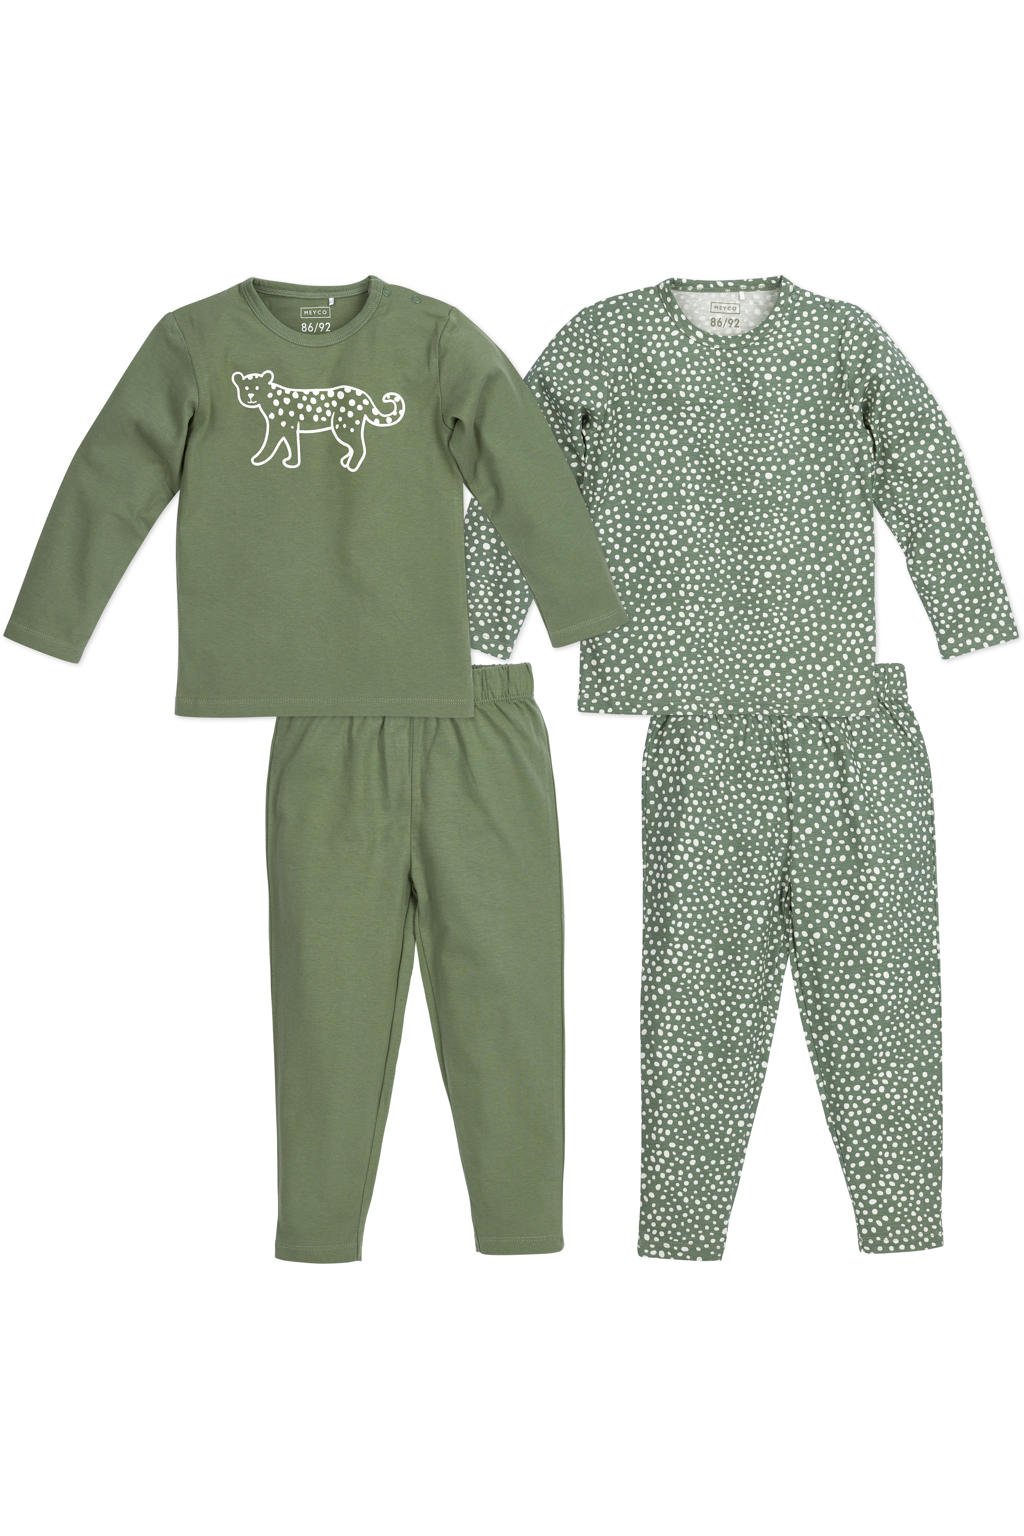 Meyco   pyjama Cheetah - set van 2 Forest Green